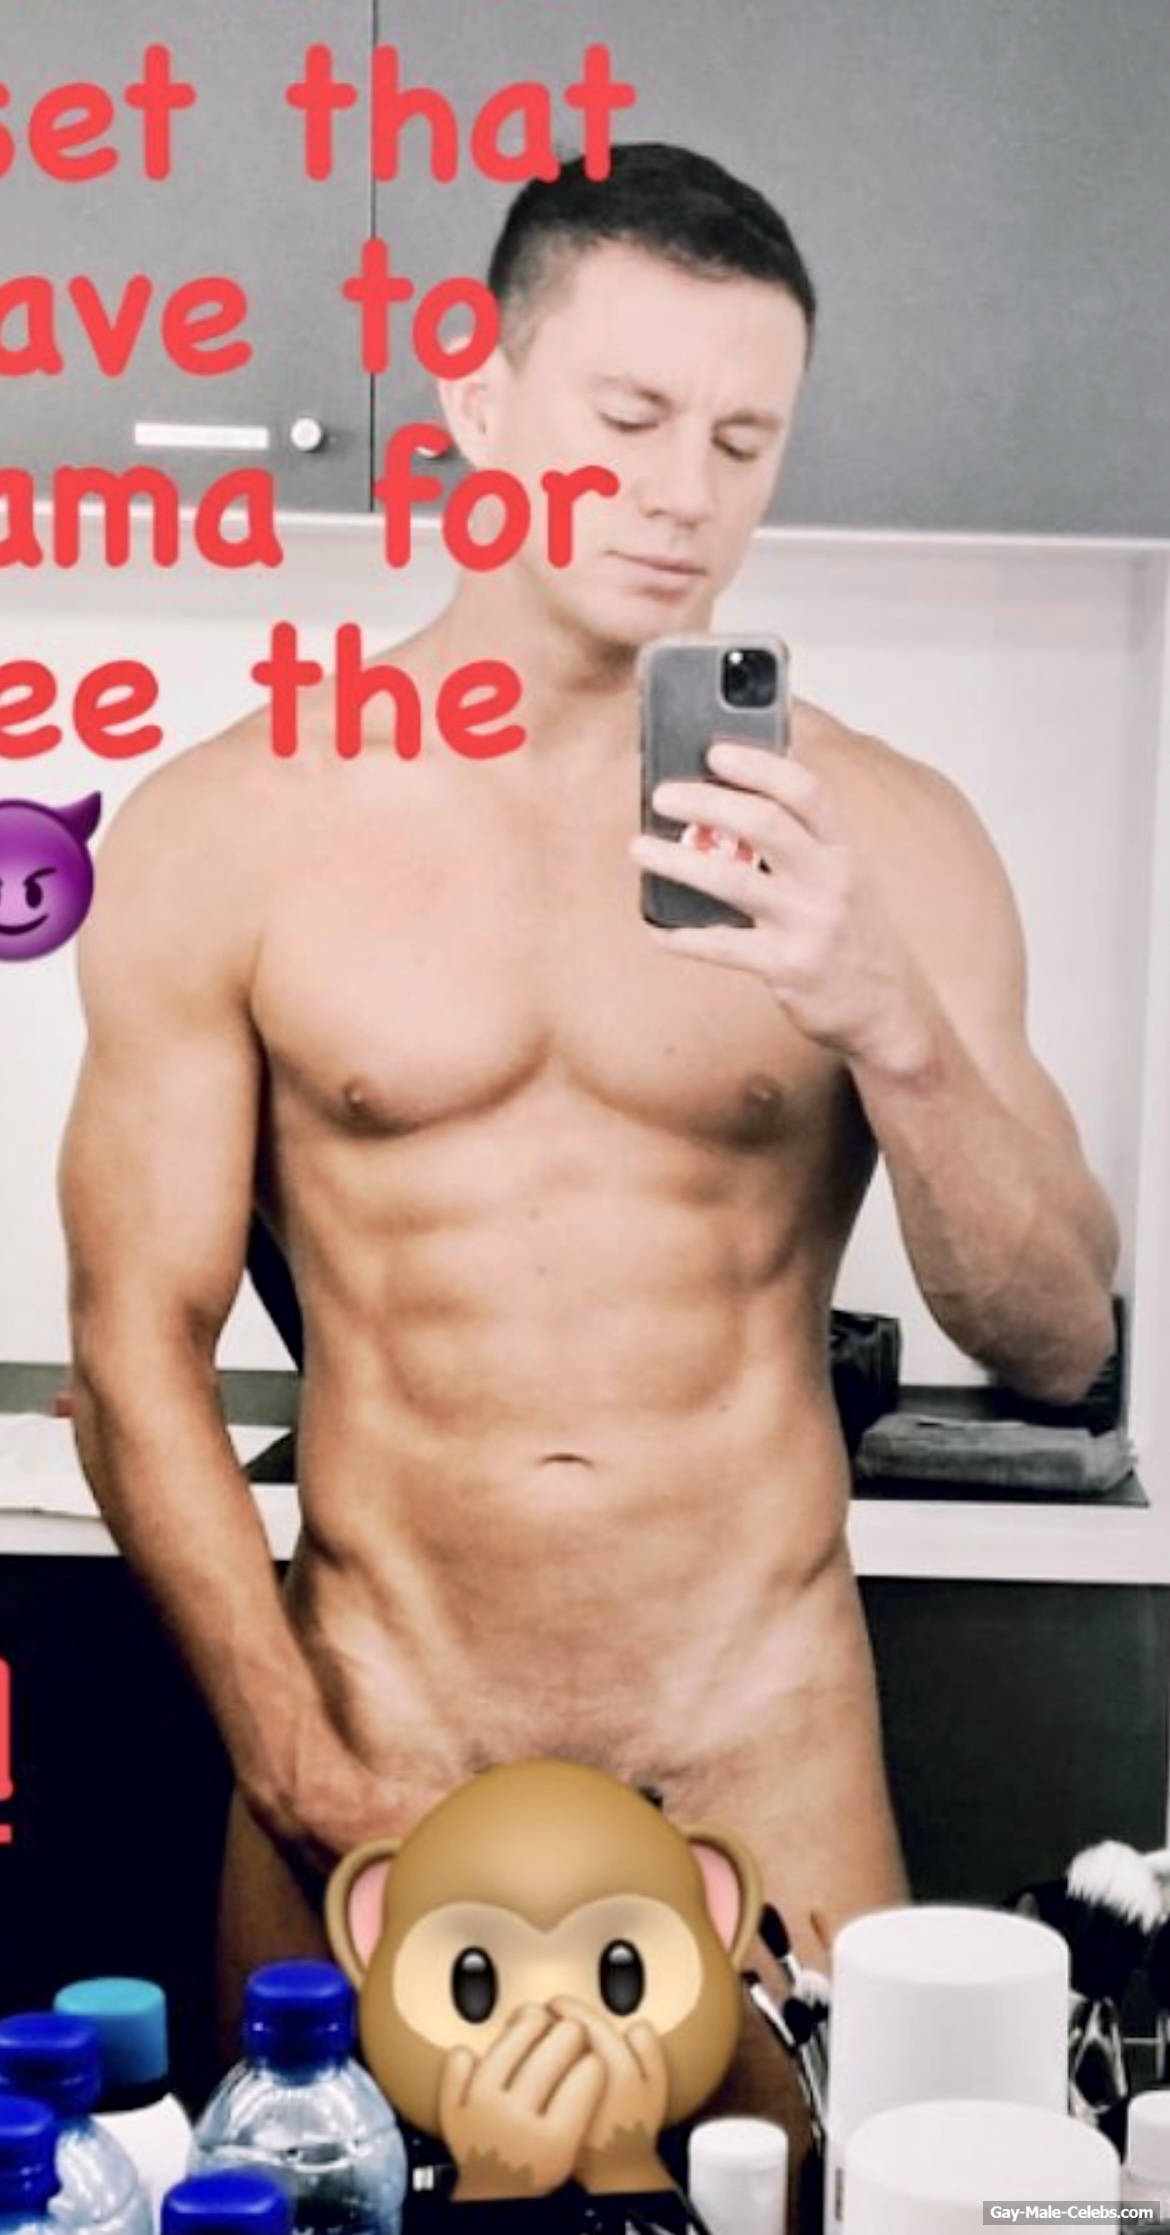 male movie star nude selfies hot photo